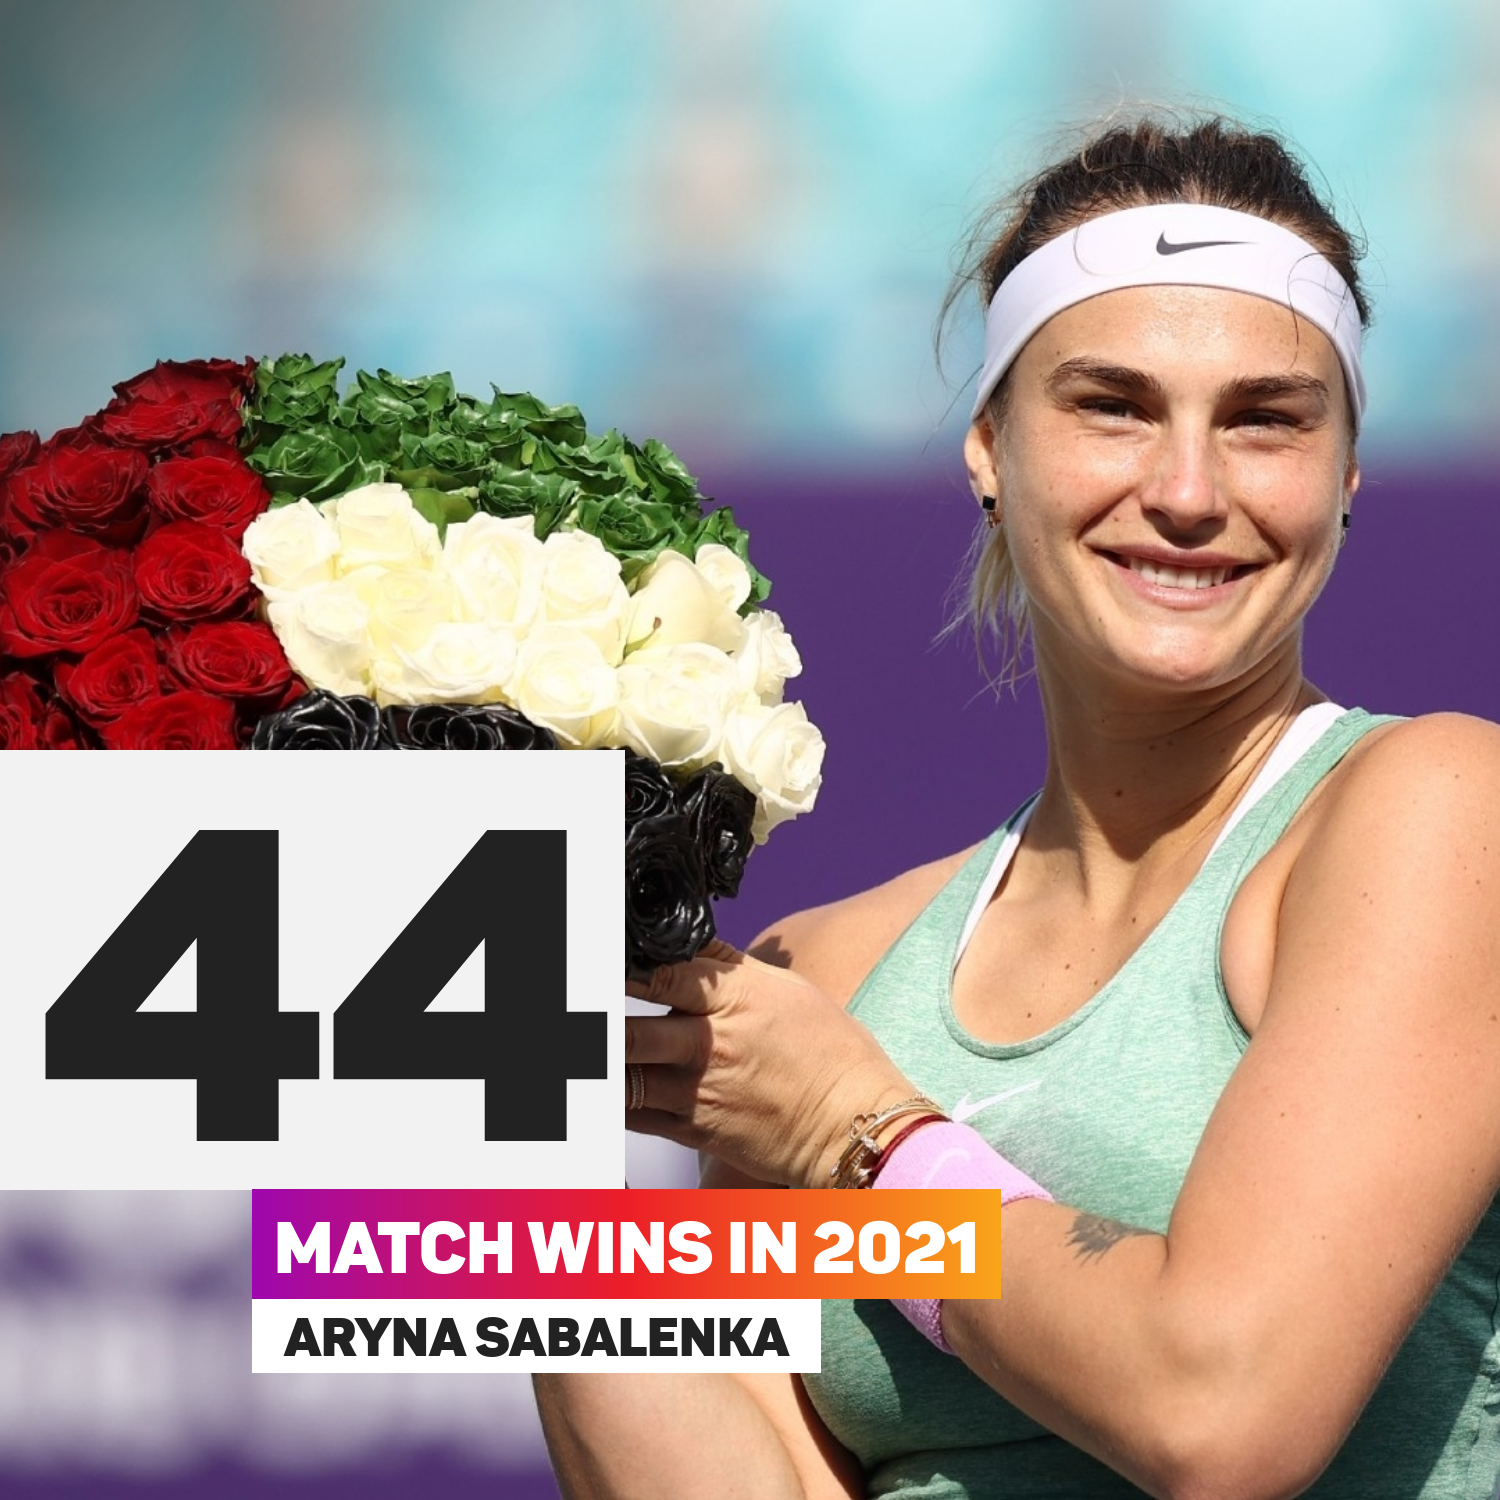 Aryna Sabalenka 44 match wins in 2021